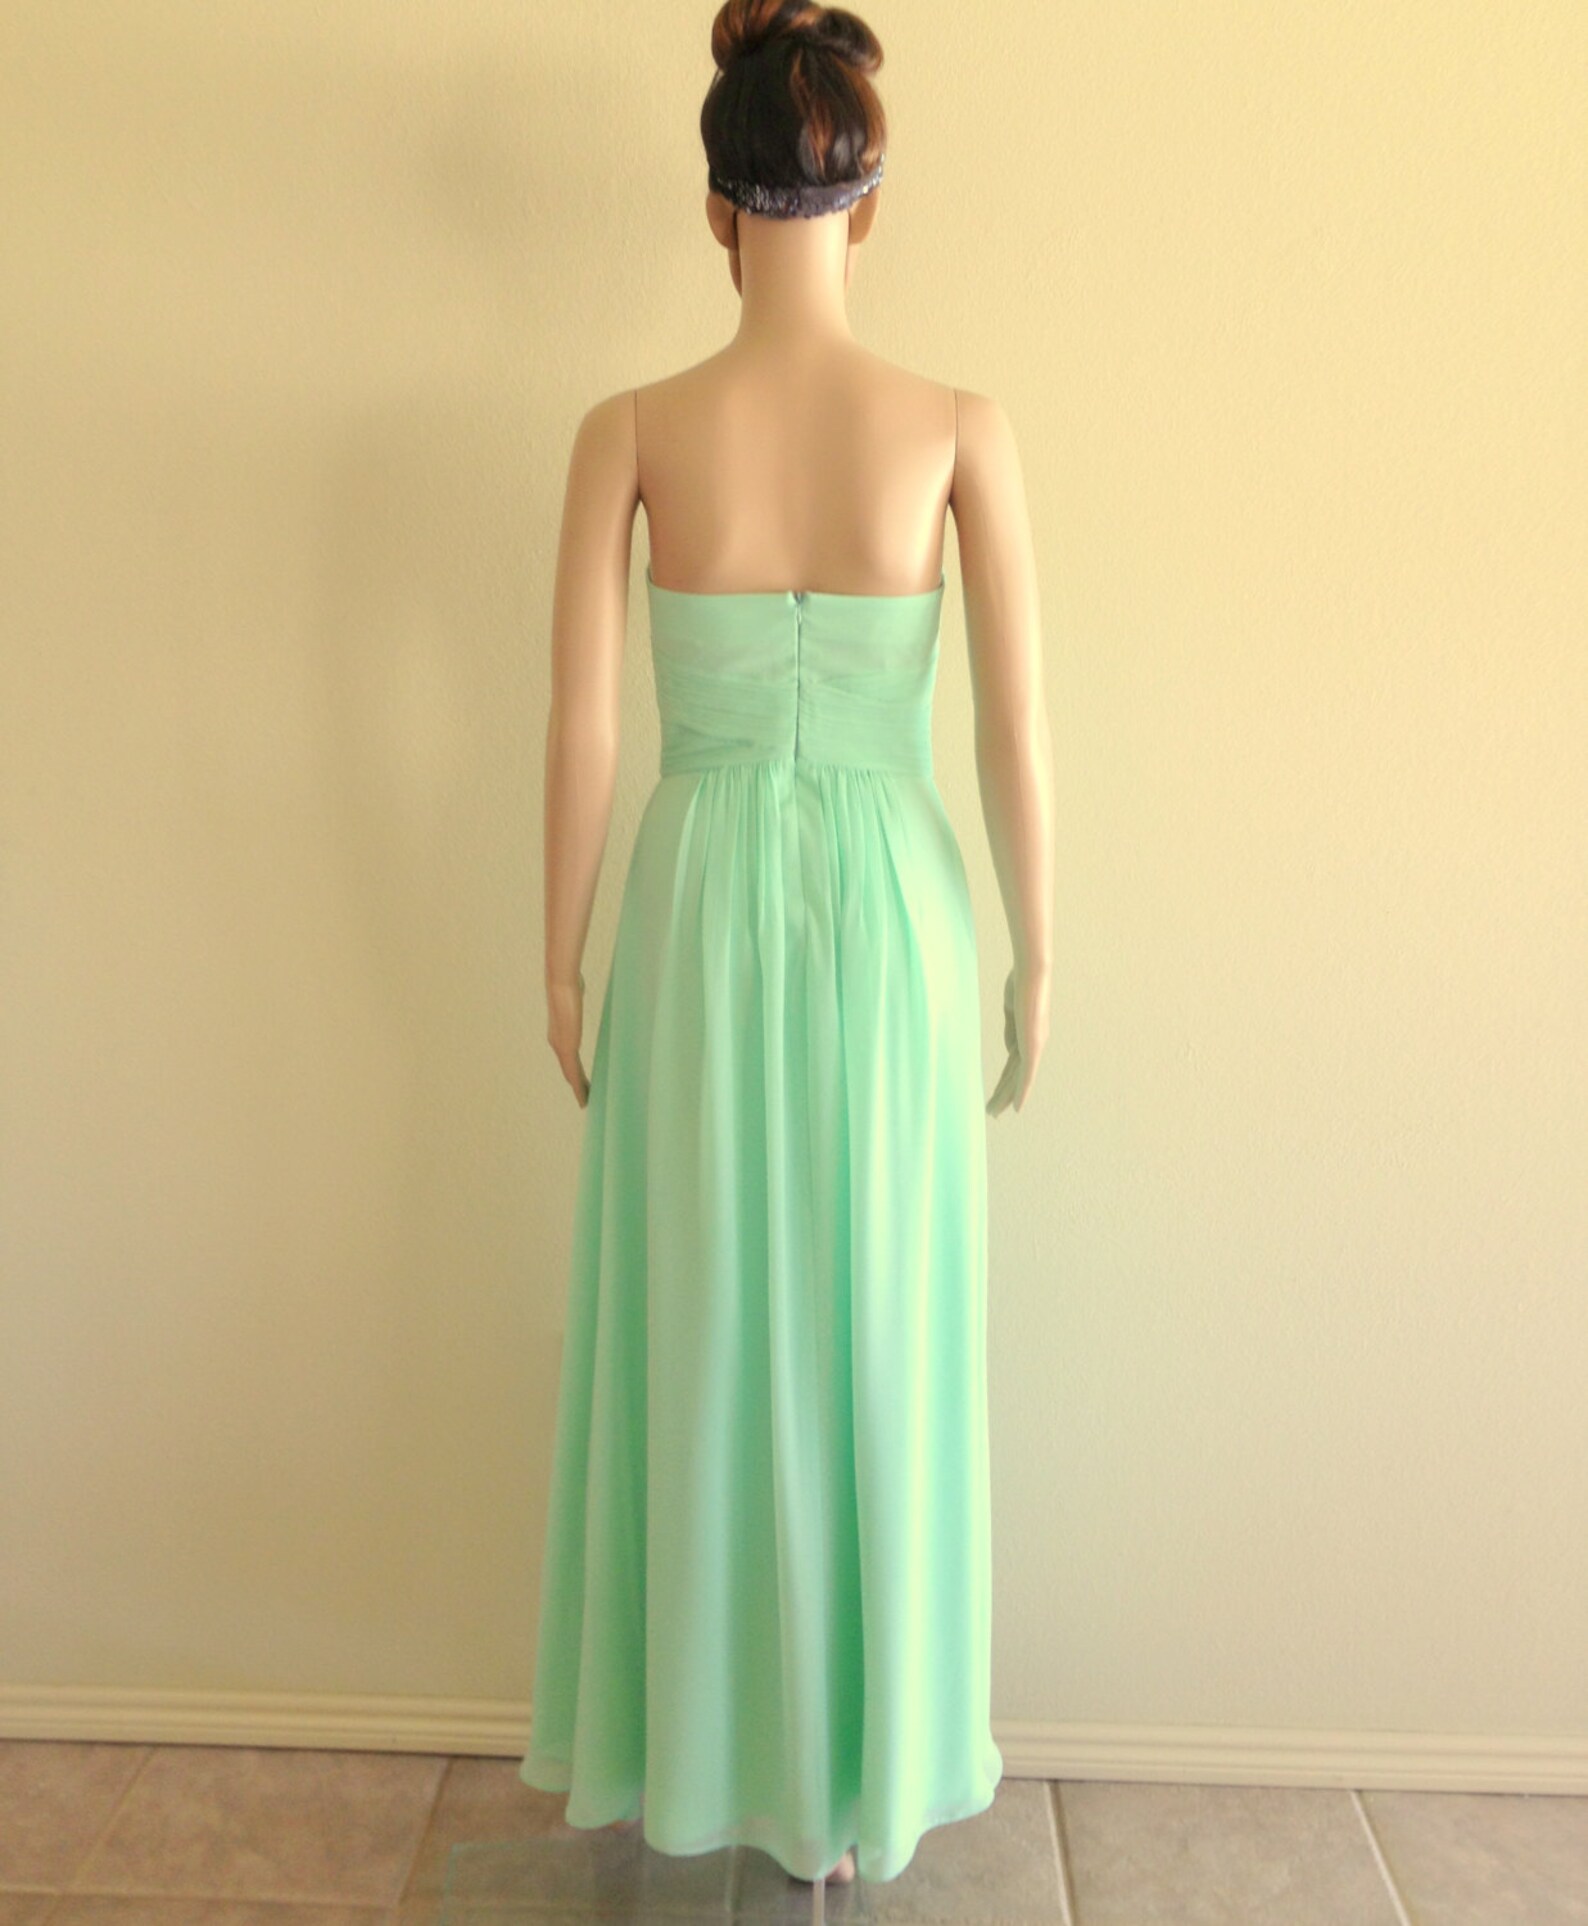 Bridesmaid Dress. Prom Dress. Light Mint Dress | Etsy